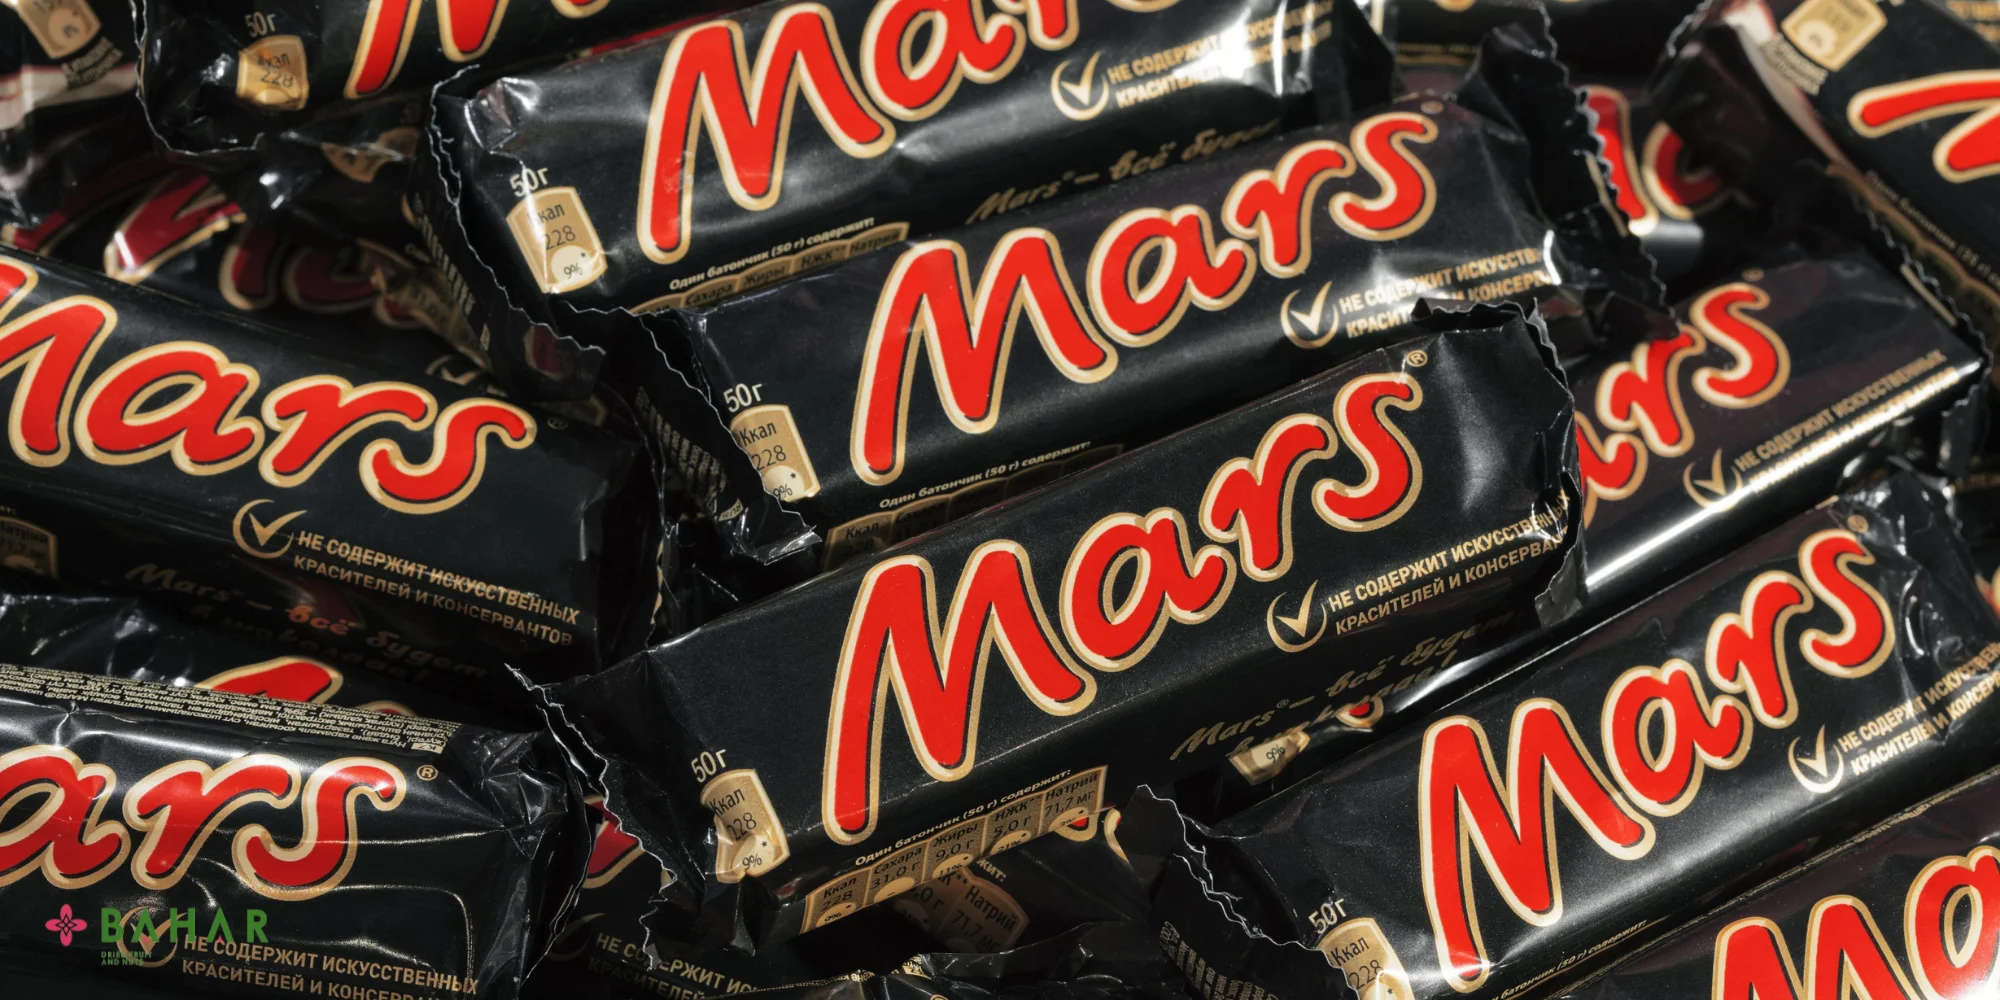 مارس | Mars